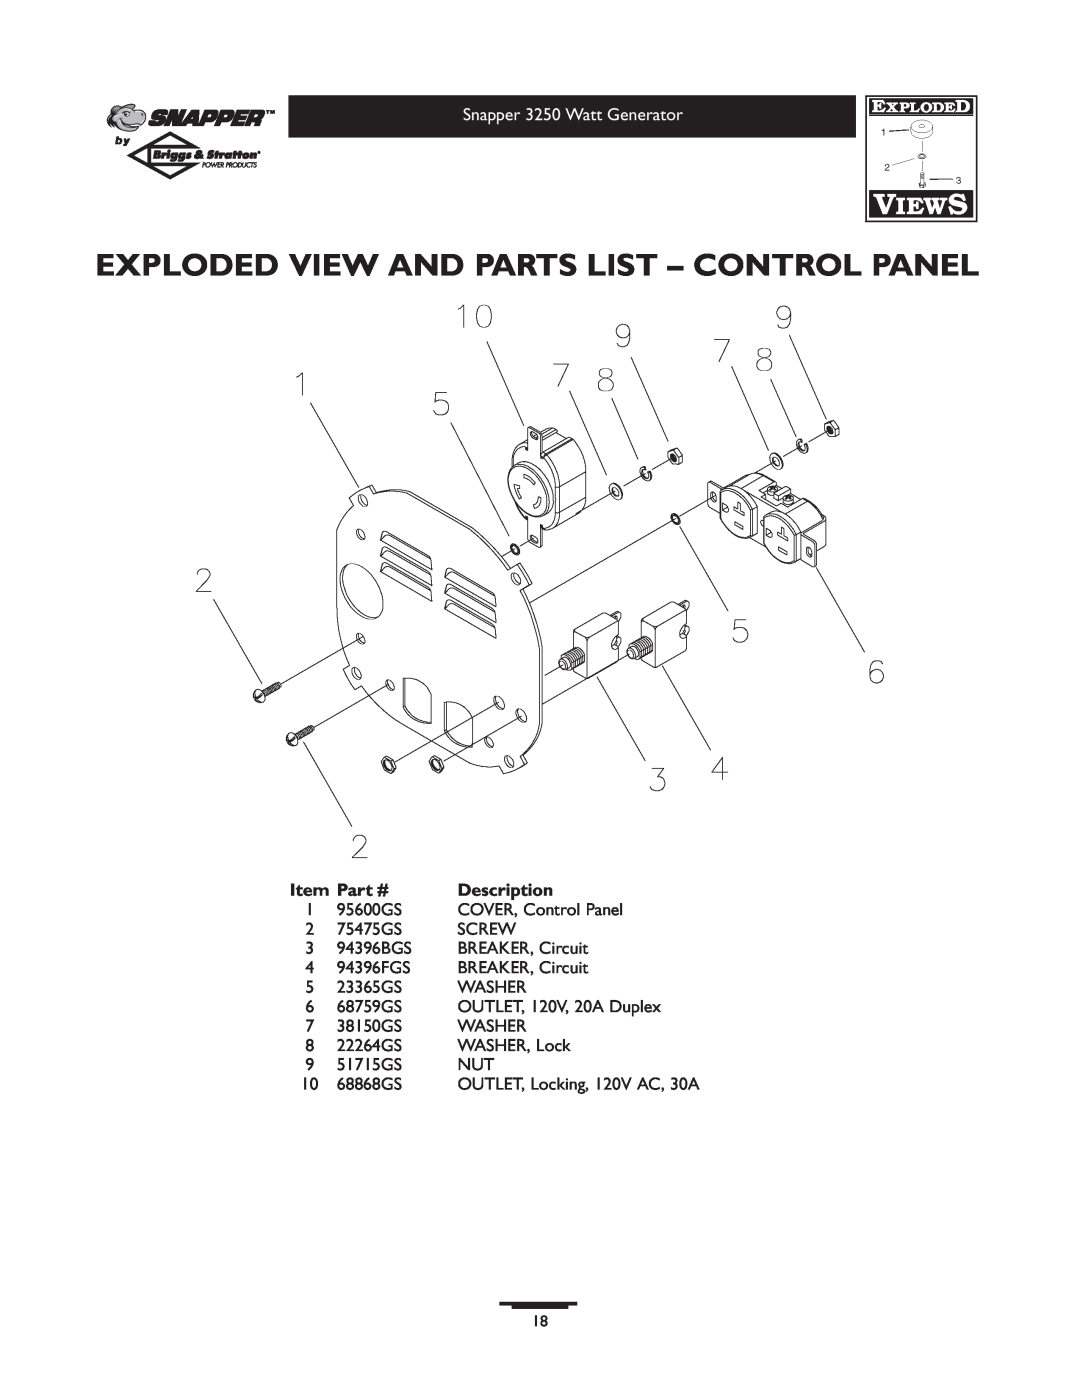 Snapper 1667-0 owner manual Exploded View And Parts List - Control Panel, Snapper 3250 Watt Generator, Description 